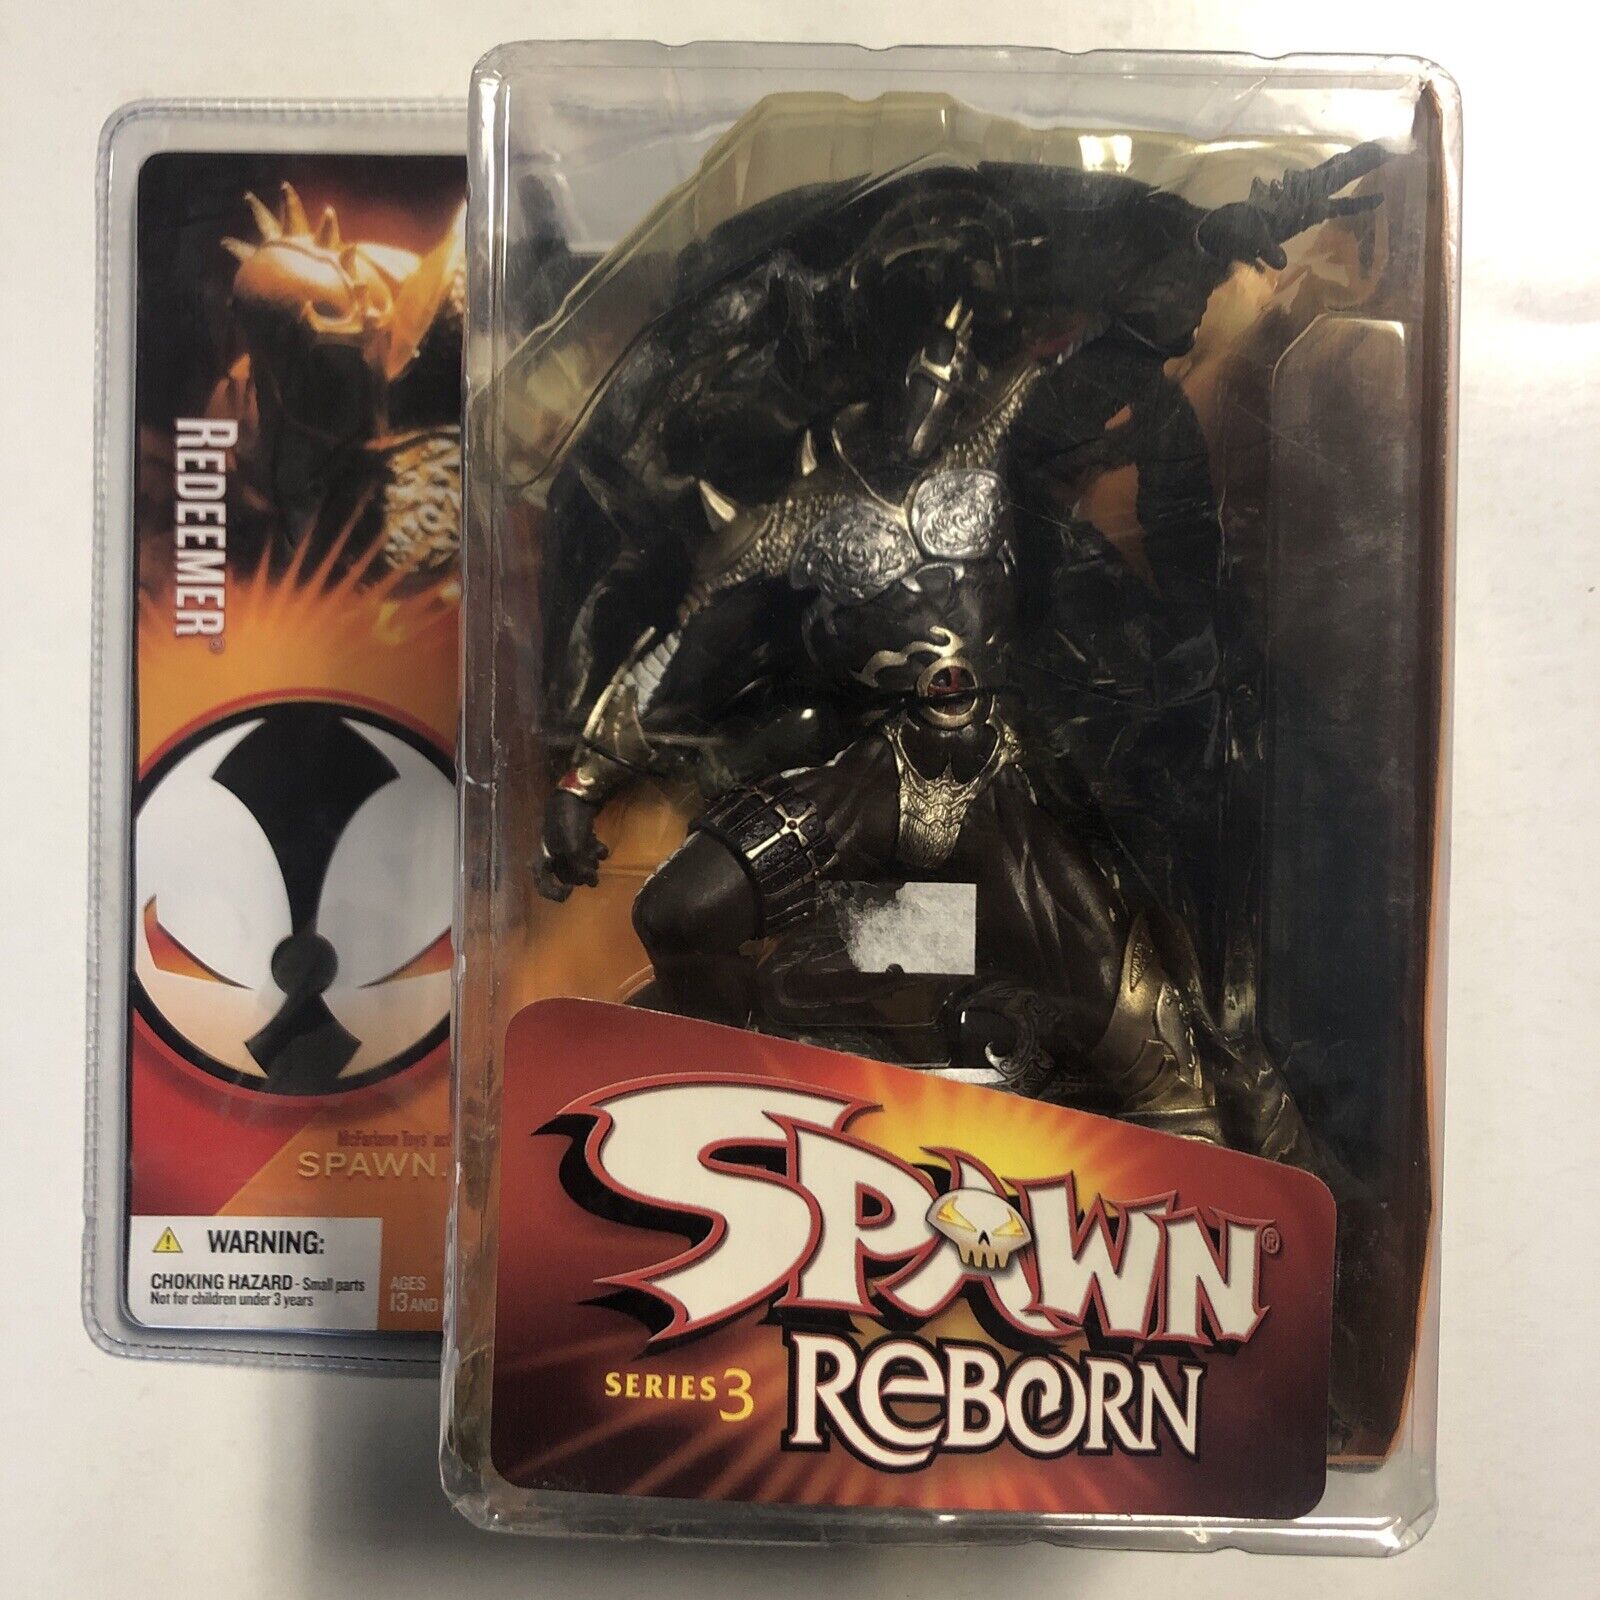 Spawn Reborn Series 3 (2005) Redeemer |Limited Edition | McFarlane